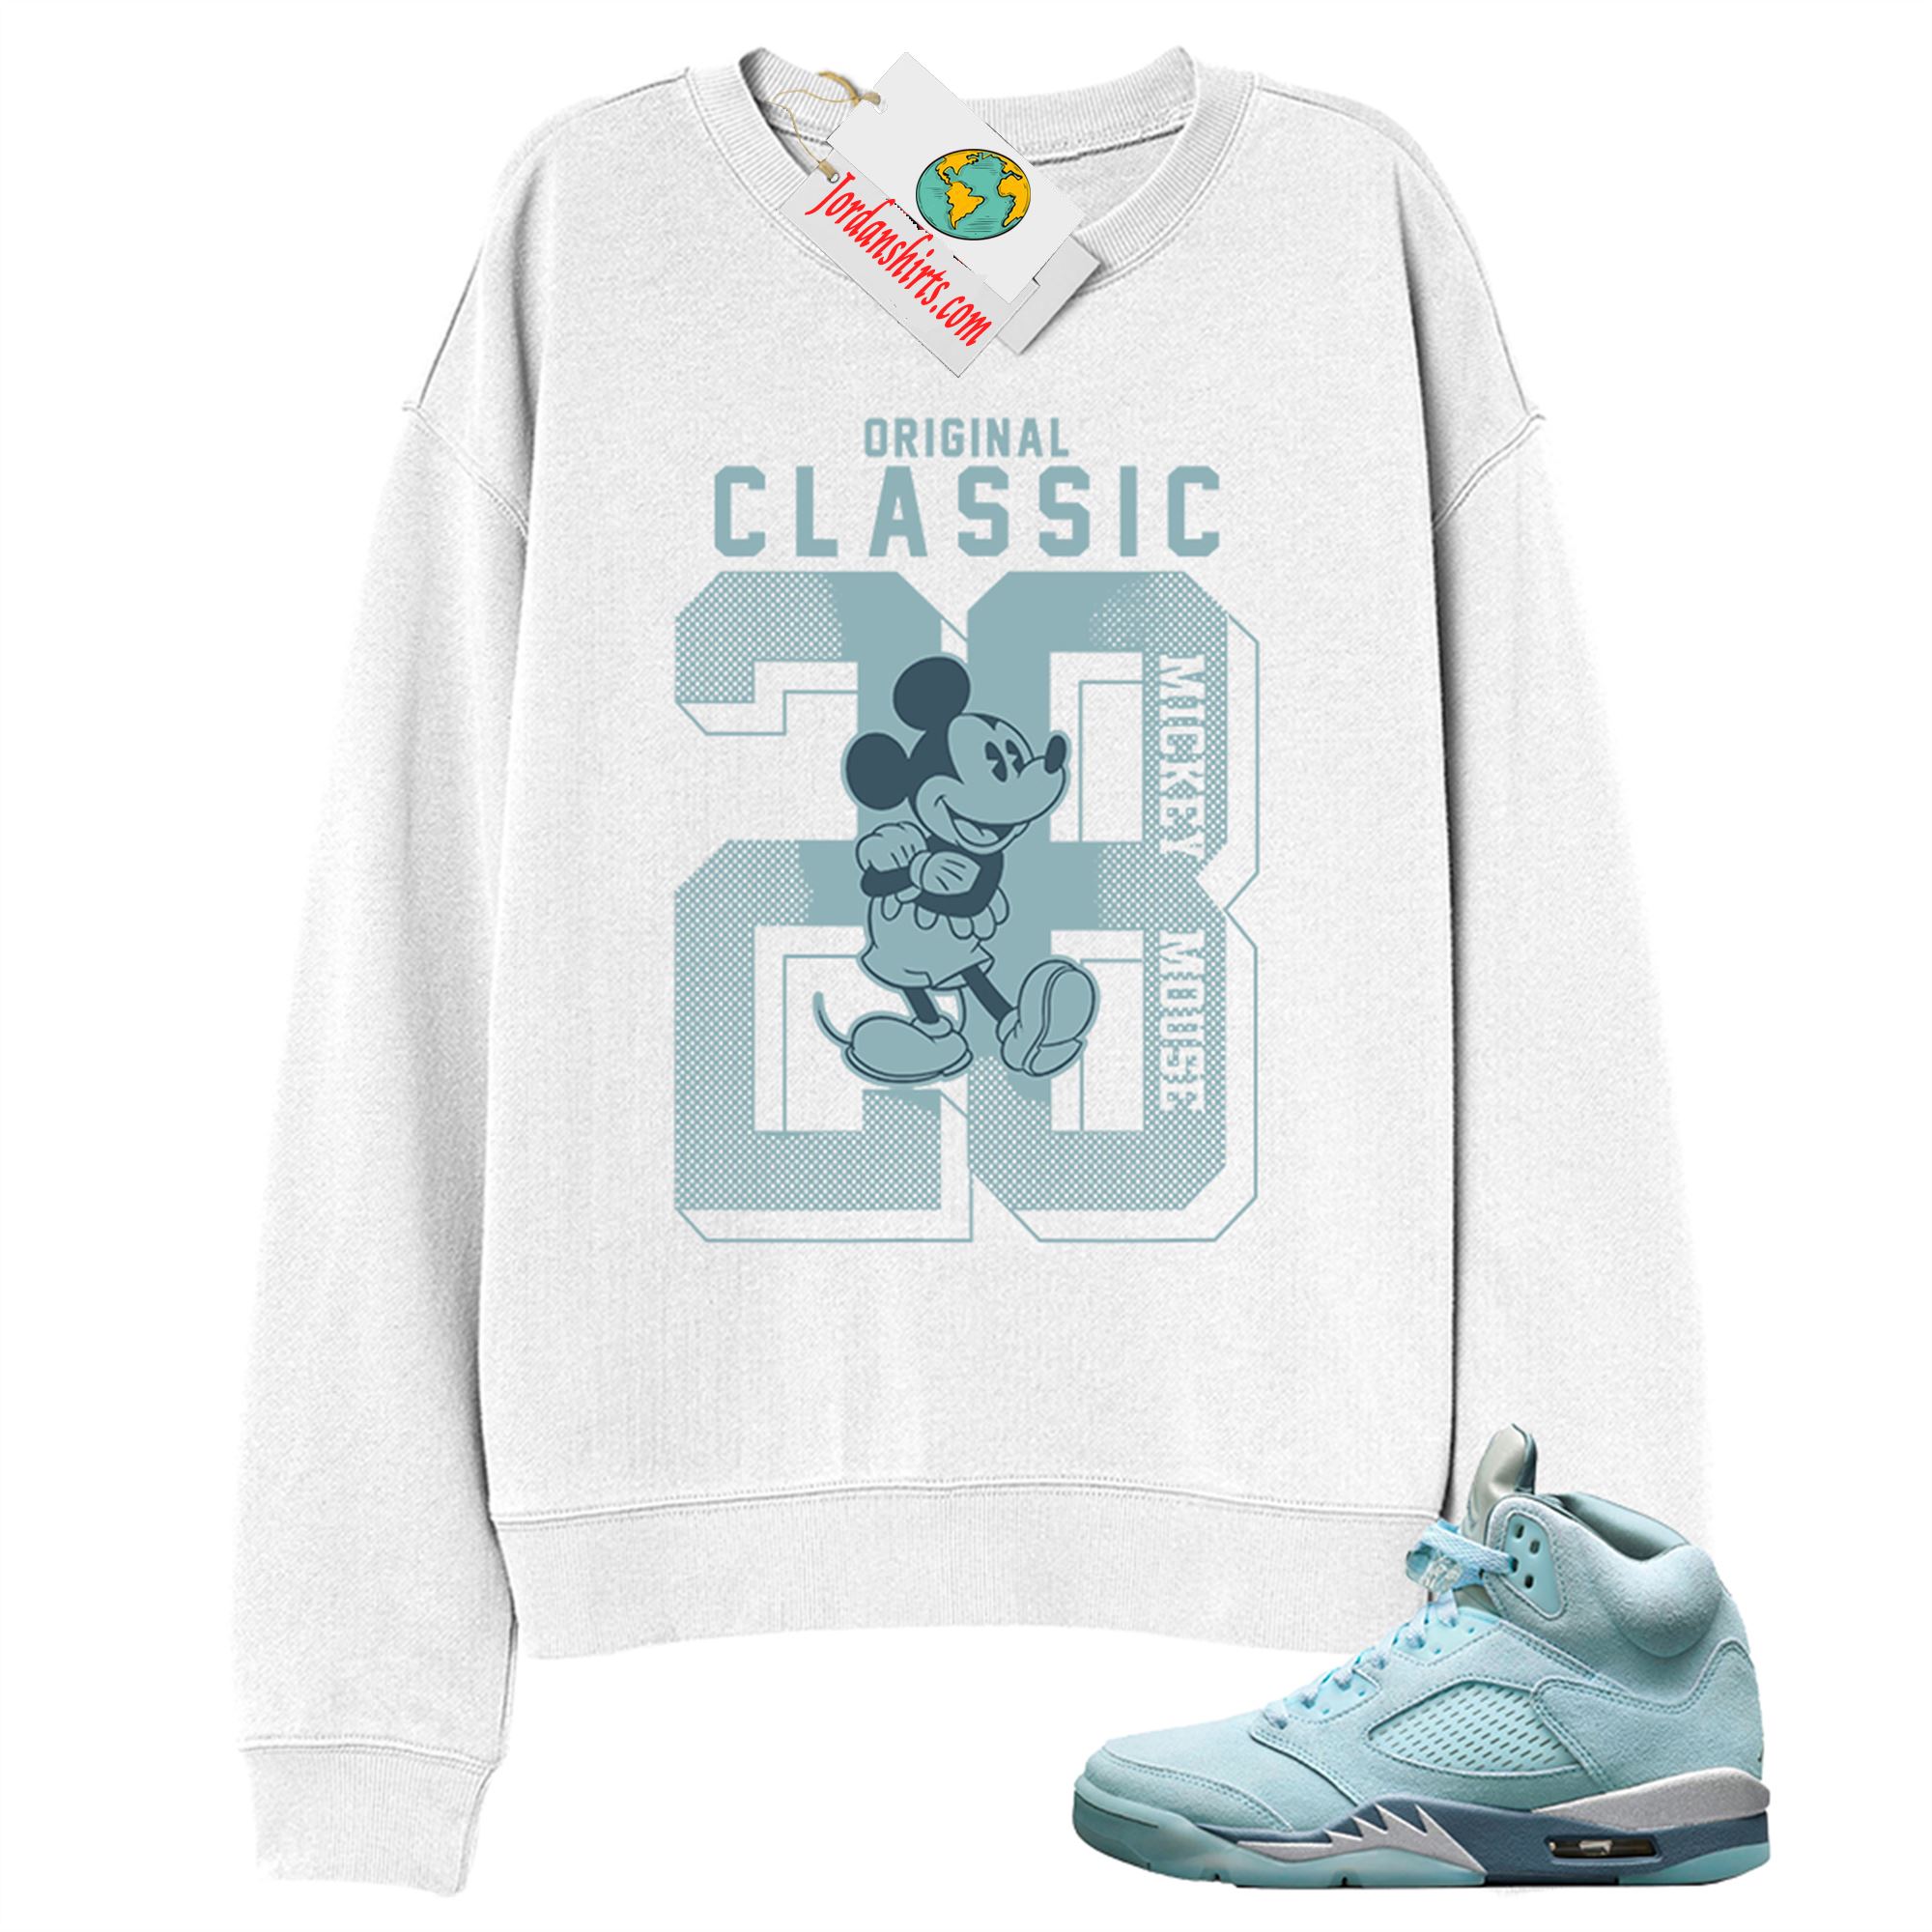 Jordan 5 Sweatshirt, Disney Mickey Mouse Classic 28 White Sweatshirt Air Jordan 5 Bluebird 5s Size Up To 5xl